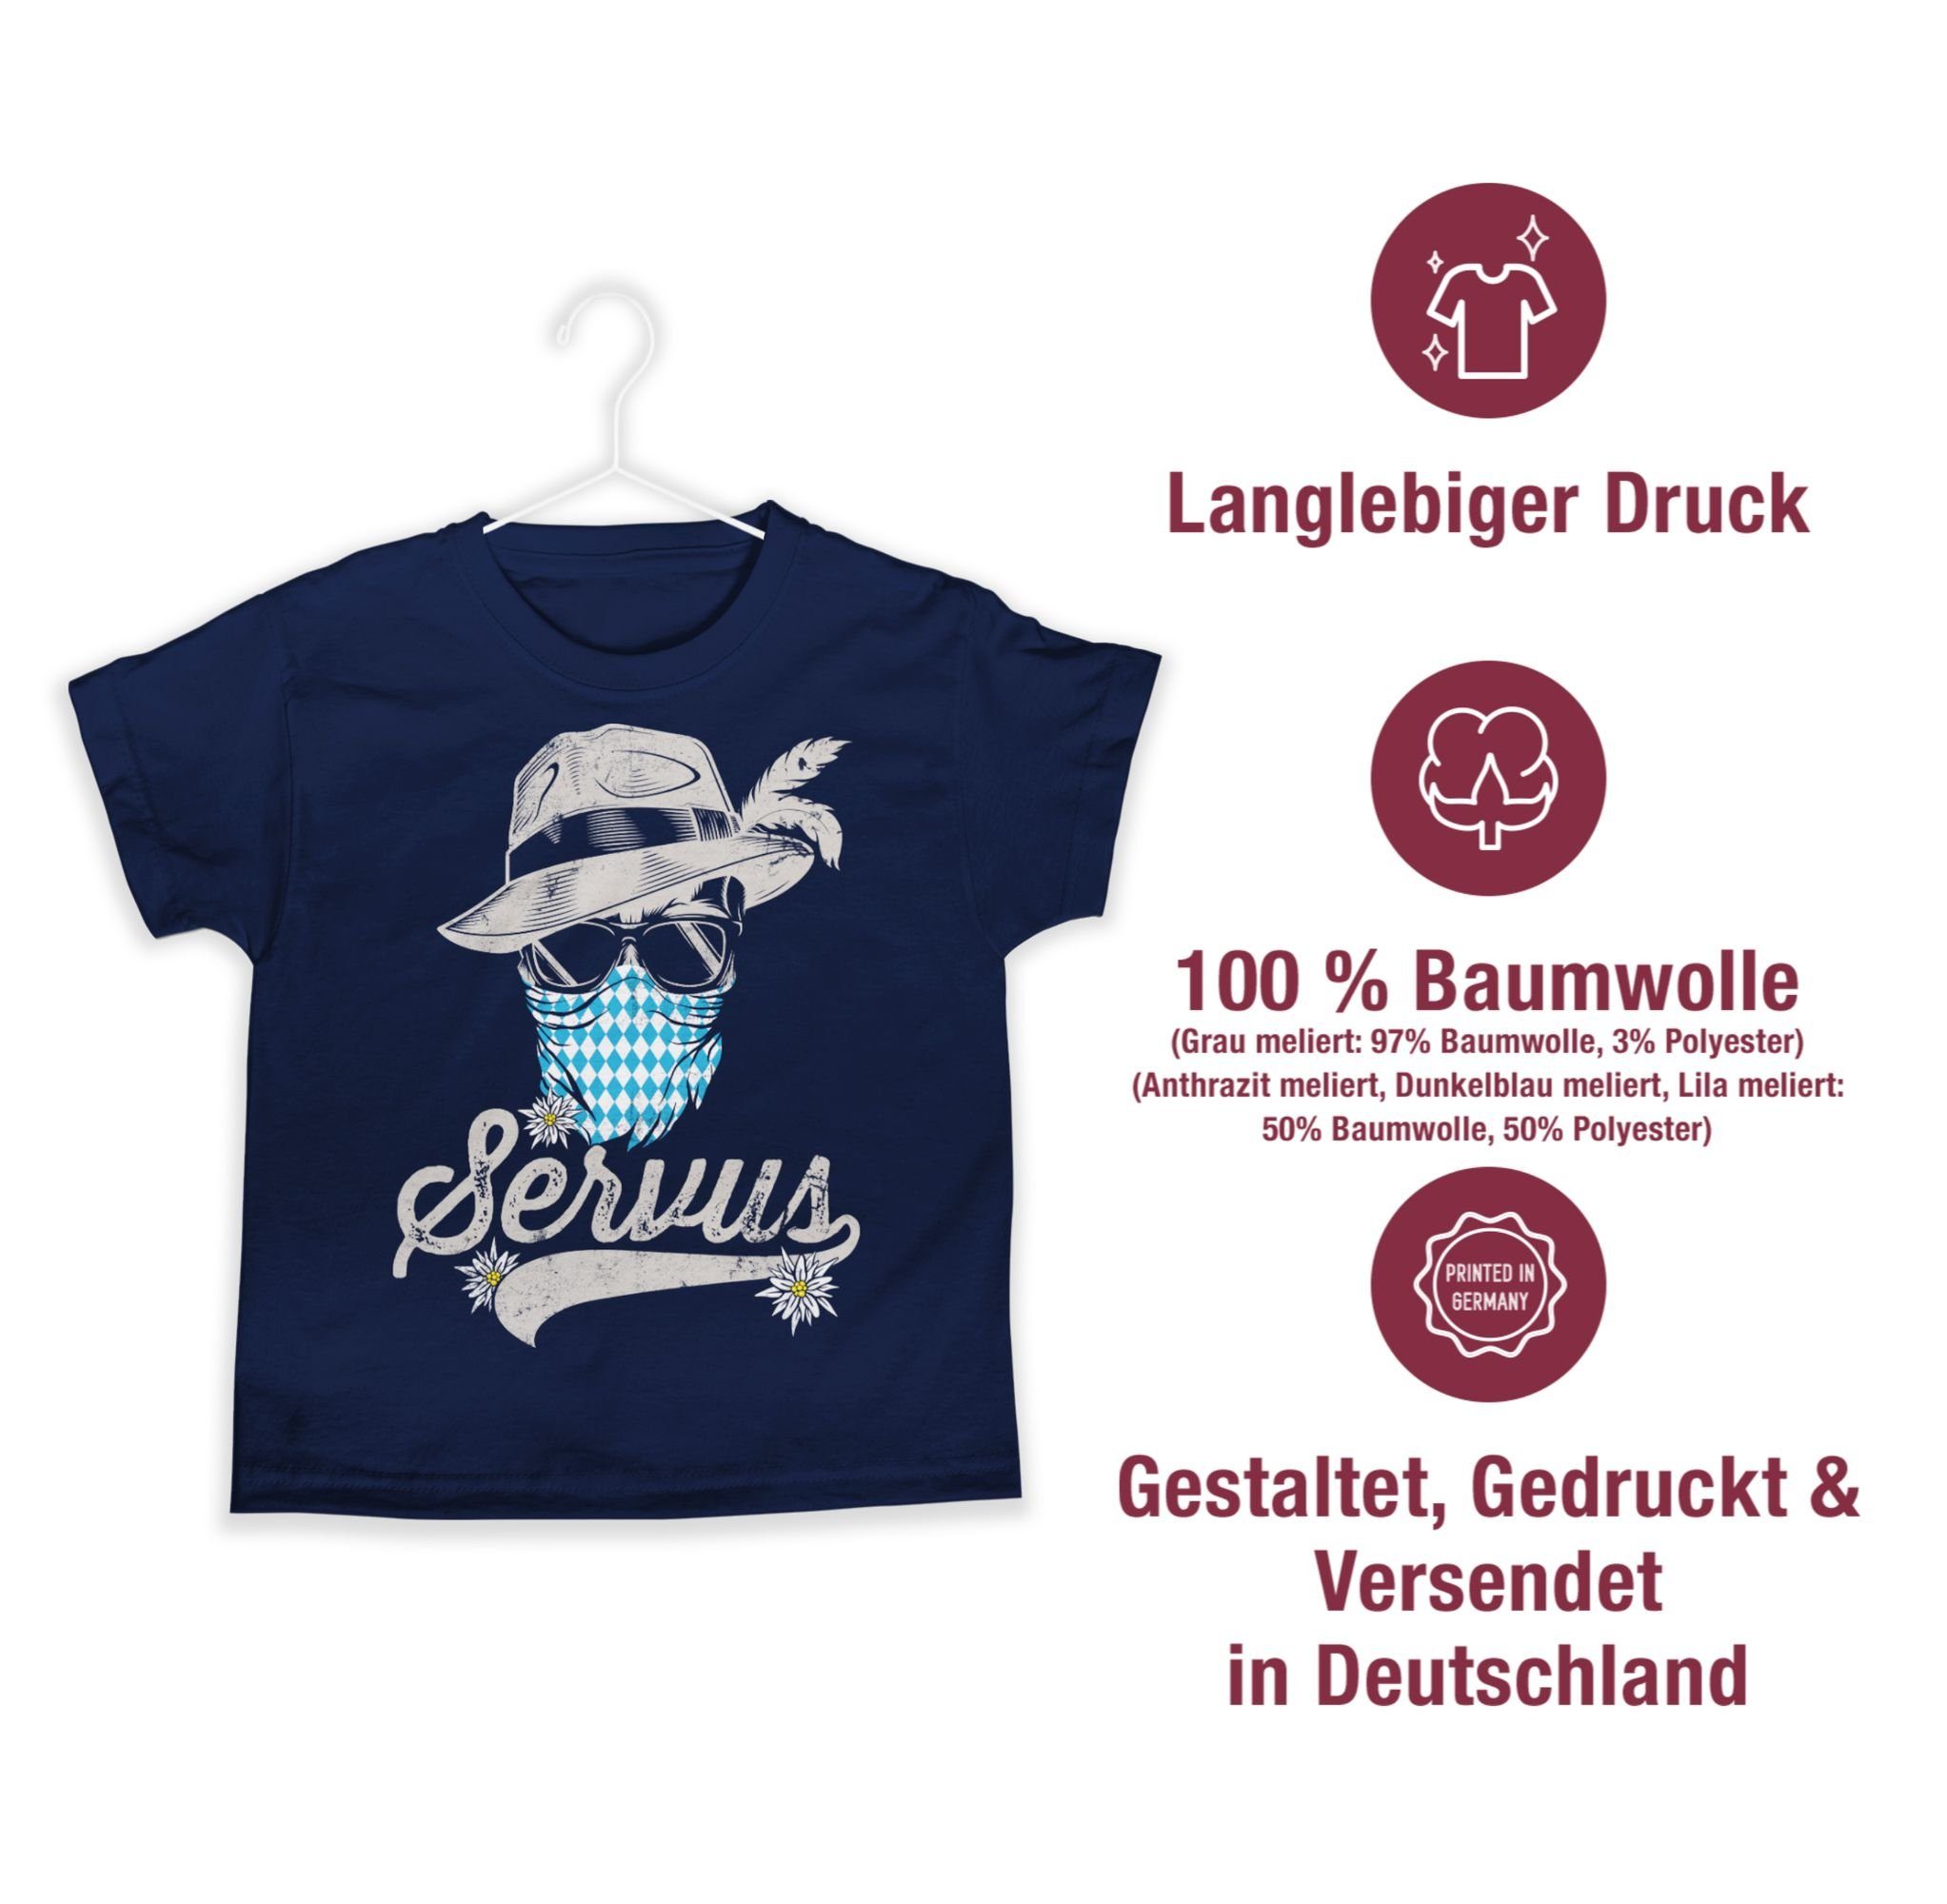 Dunkelblau Bayern Shirtracer Bavaria Kinder für Oktoberfest Bayrisch T-Shirt Outfit Trachten Totenkopf Mode Servus Edelweiß Tirol 02